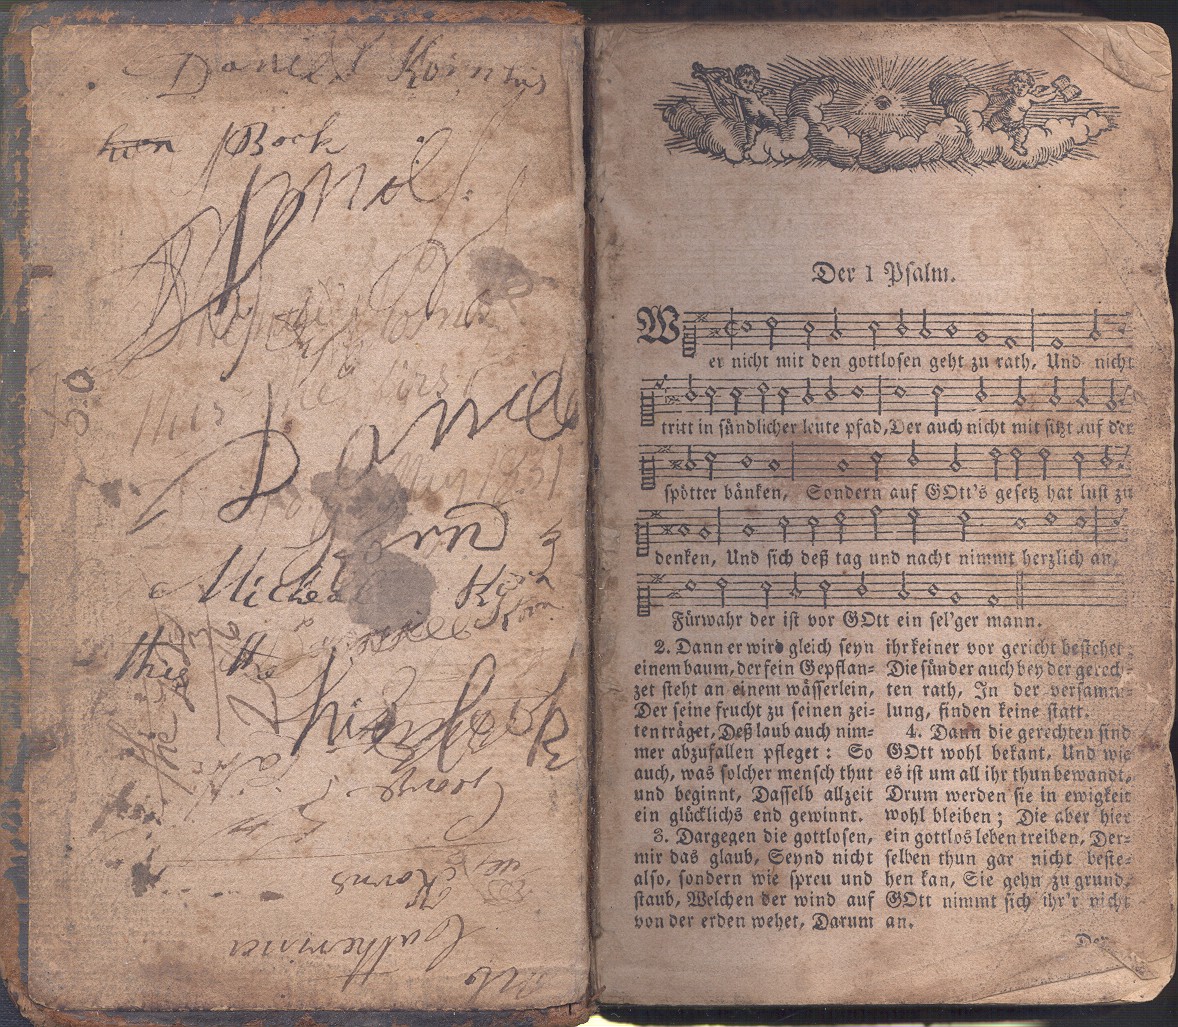 Psalm Book that belonged to Daniel Korn of Southampton Township, Somerset County, PA.